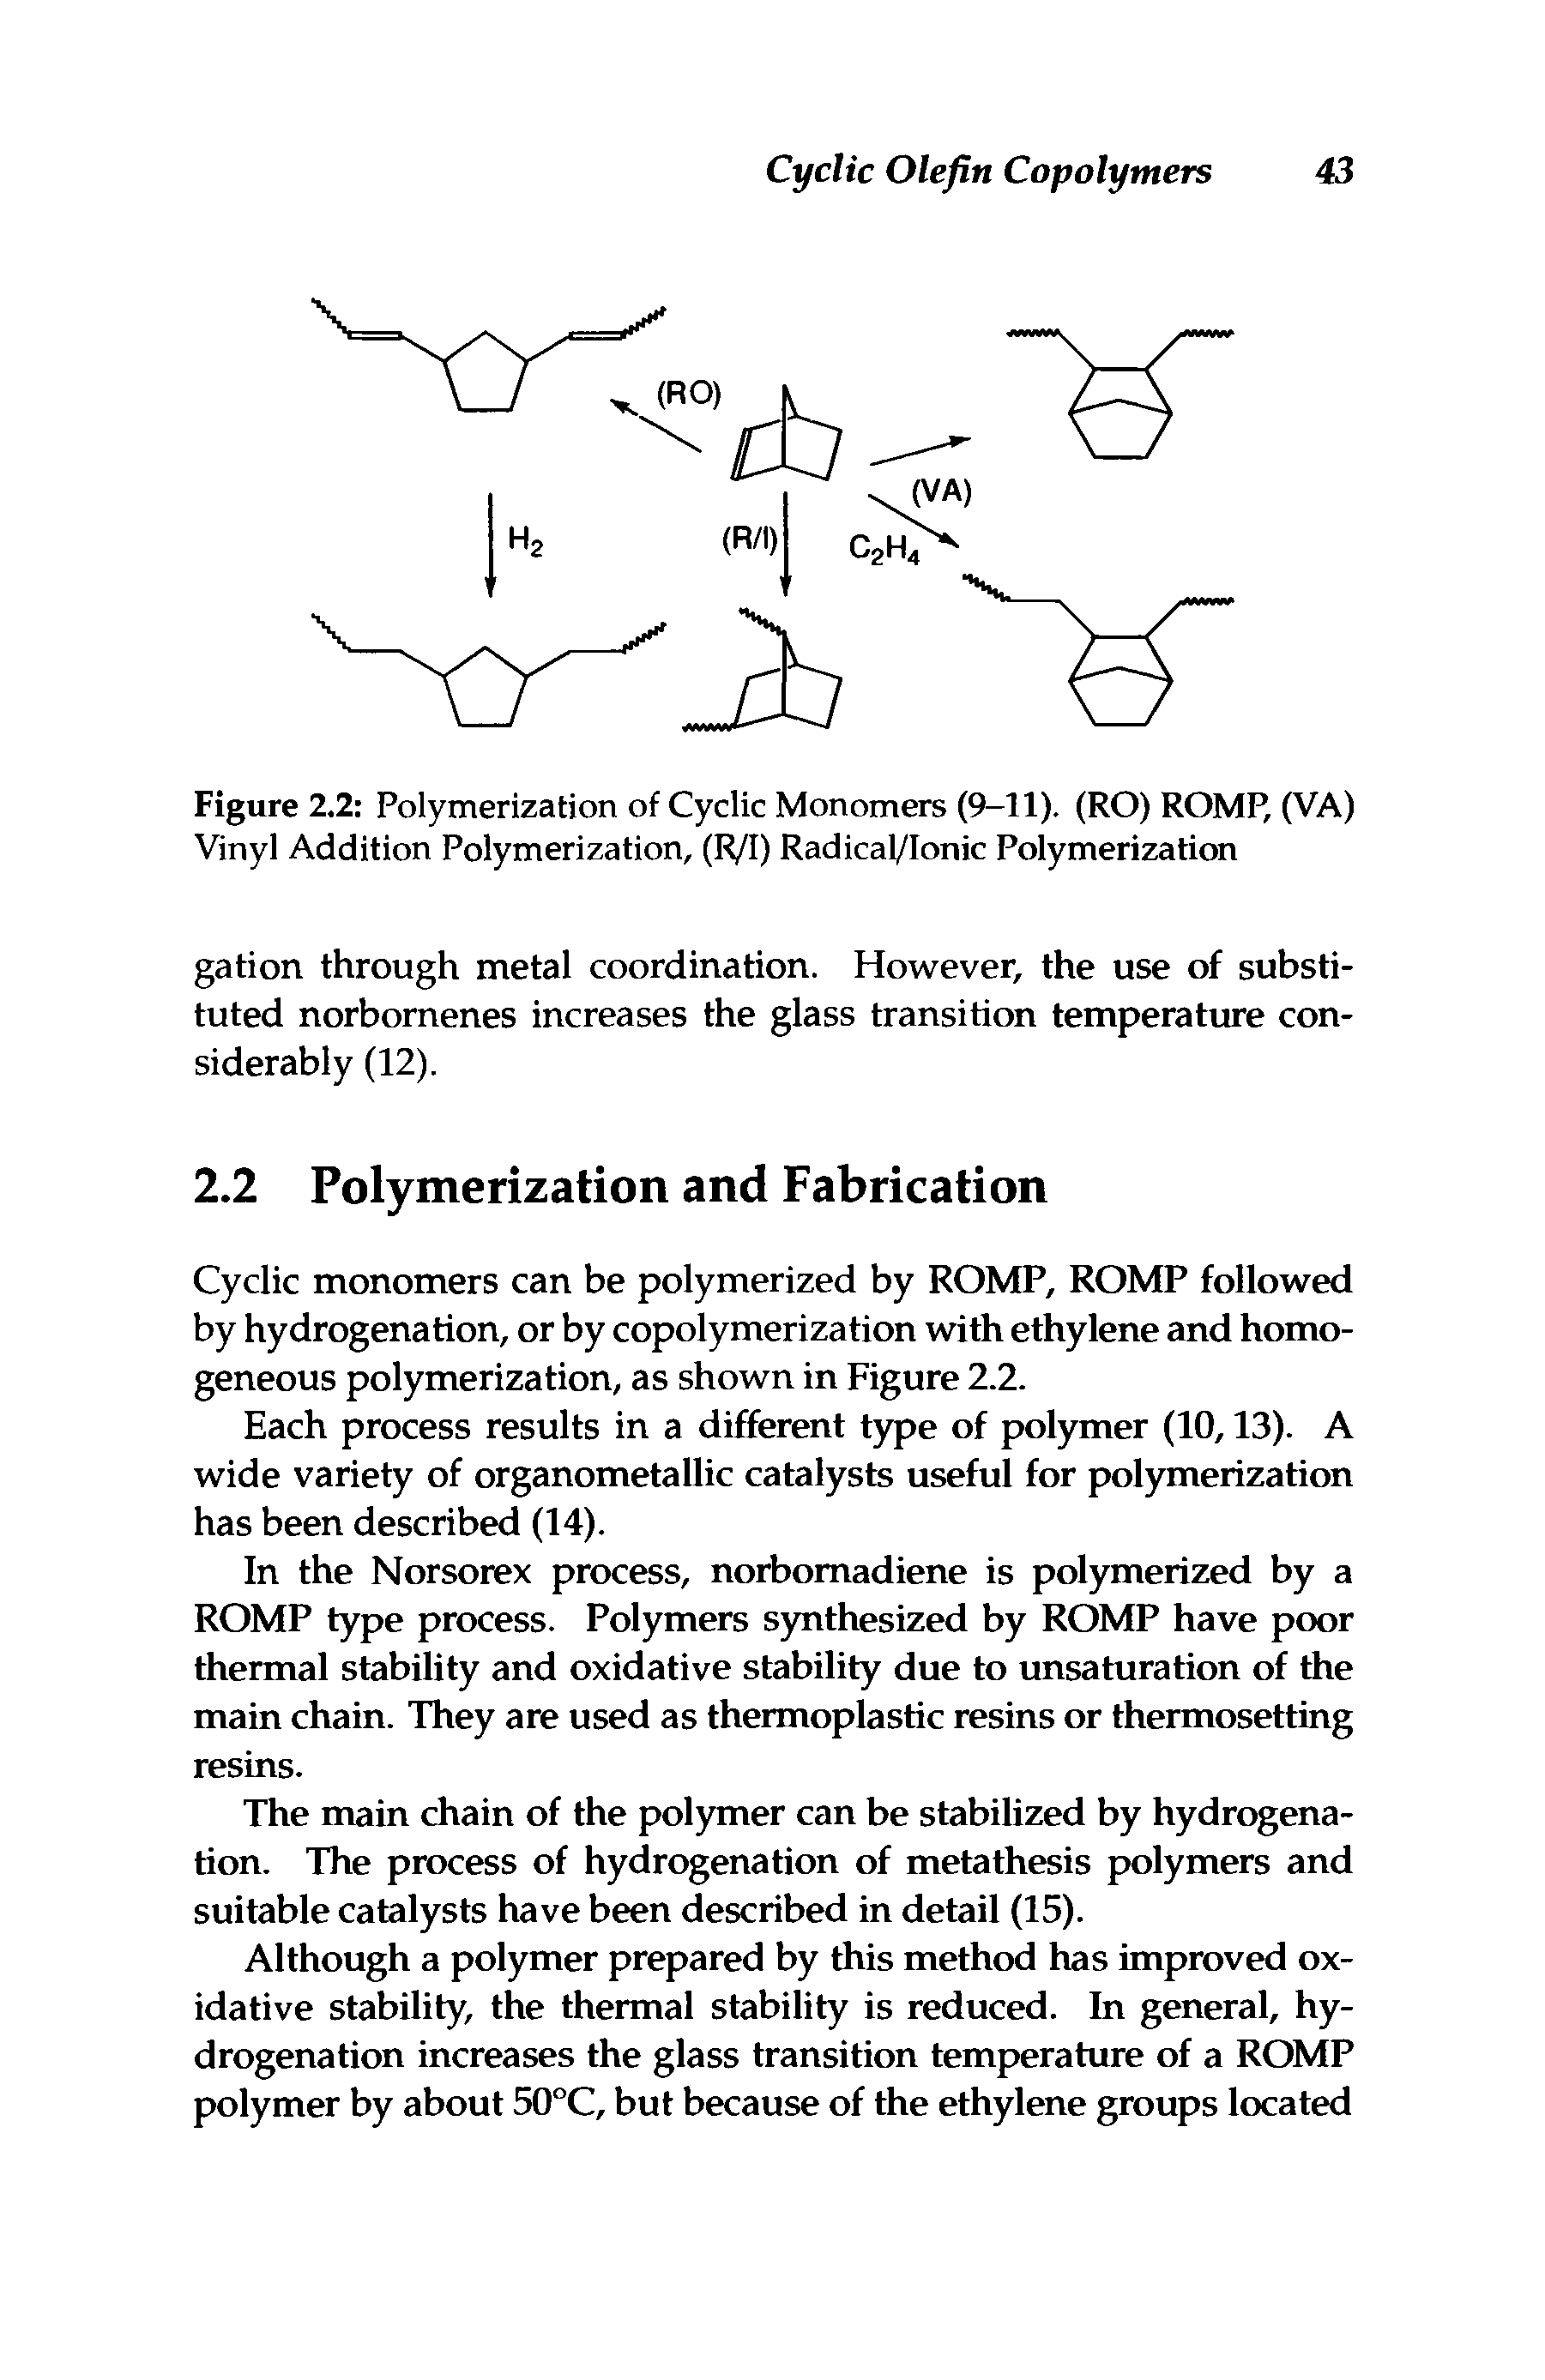 Figure 2.2 Polymerization of Cyclic Monomers (9-11). (RO) ROMP, (VA) Vinyl Addition Polymerization, (R/I) Radical/Ionic Polymerization...